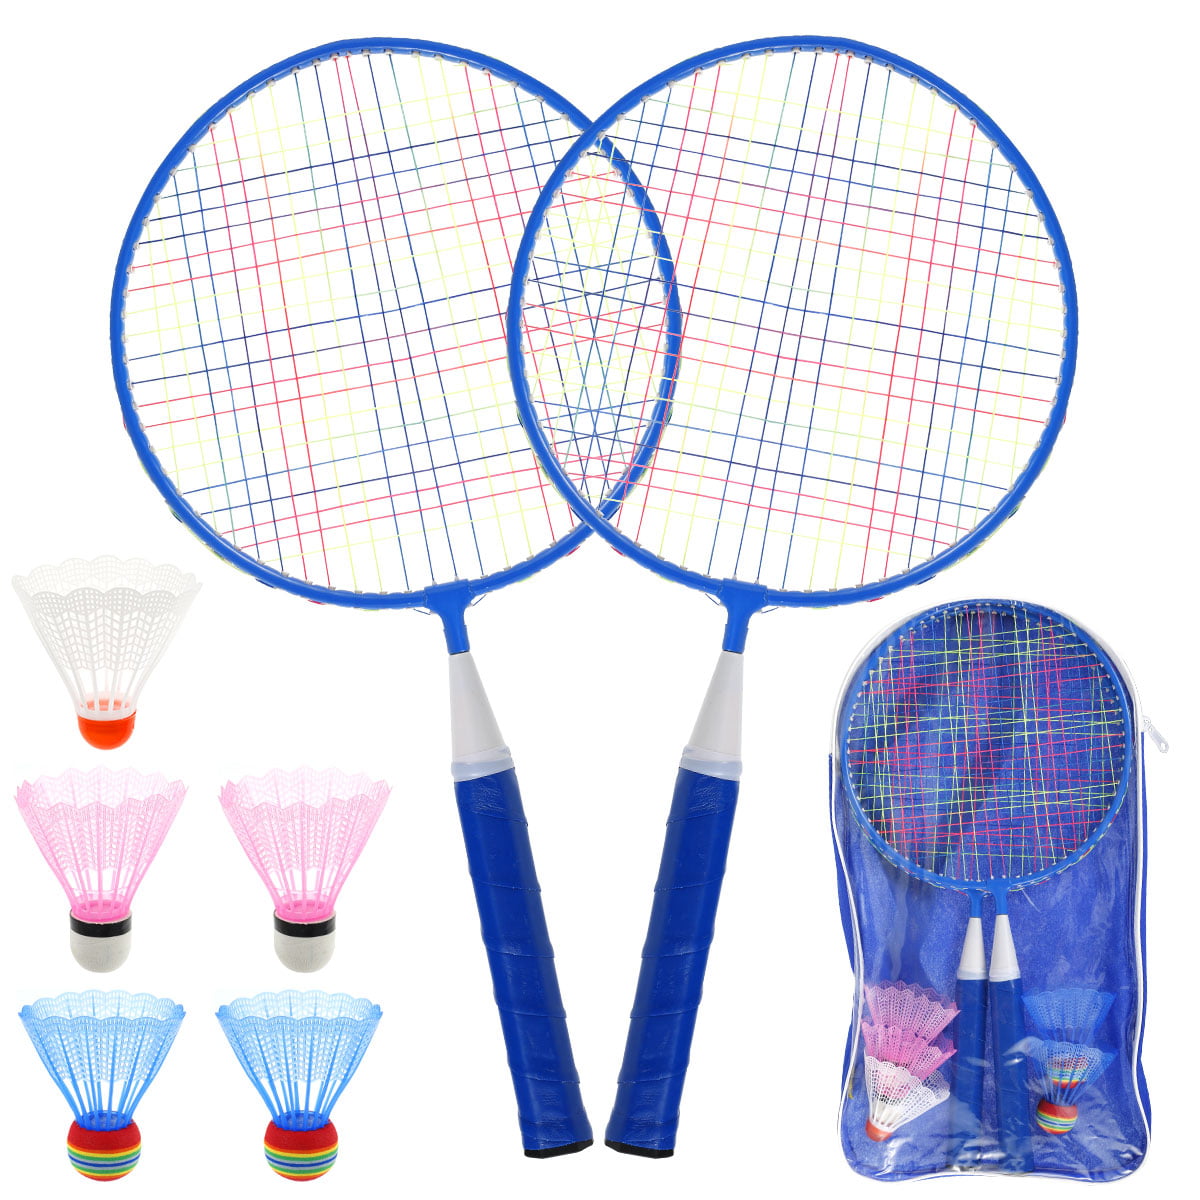 Badminton Racket Set of 4 for Backyard Family Game w/ Carry Bag Carbon Shaft 